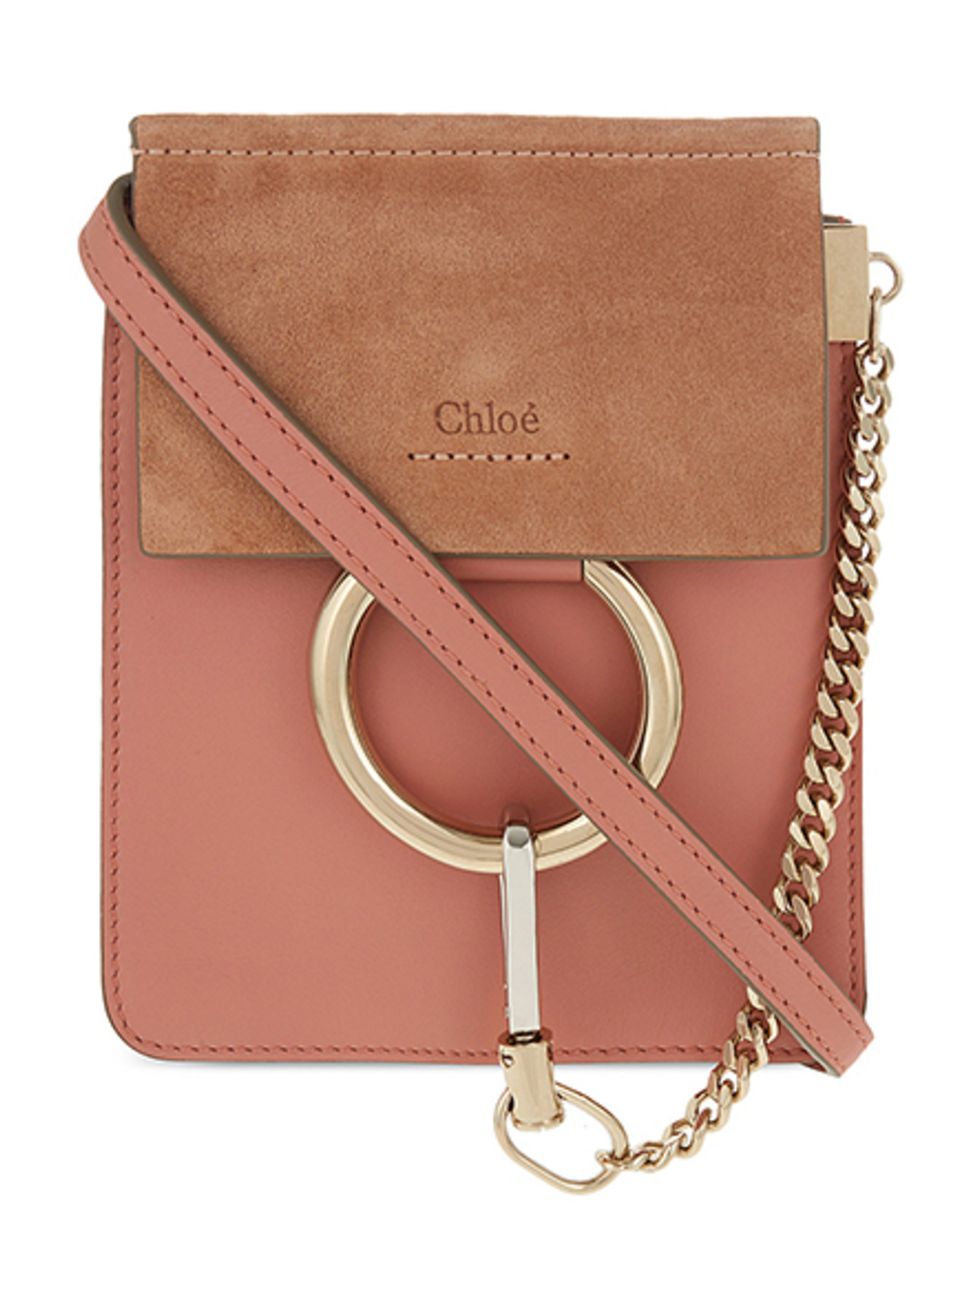 <p>Faye bag, £575, <a href="http://www.selfridges.com/GB/en/cat/chloe-faye-mini-bracelet-leather-shoulder-bag_221-3001525-3S1229H2O/?previewAttribute=Misty+rose">Chloe at Selfridges</a></p>